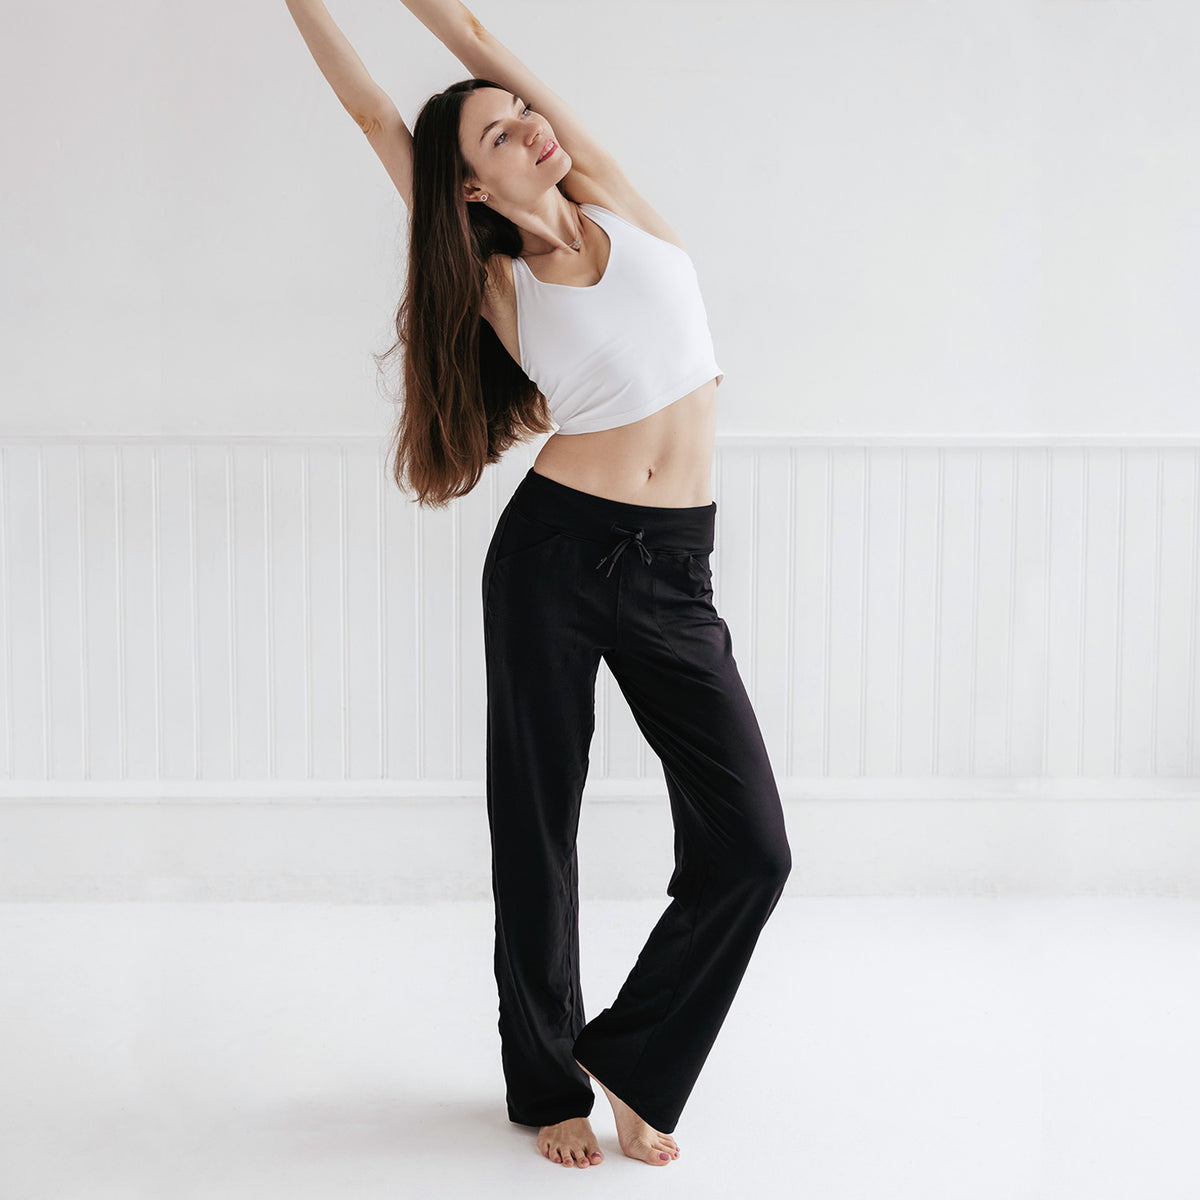 Aayomet Womens Yoga Pants Petite Women's Yoga Running Pants